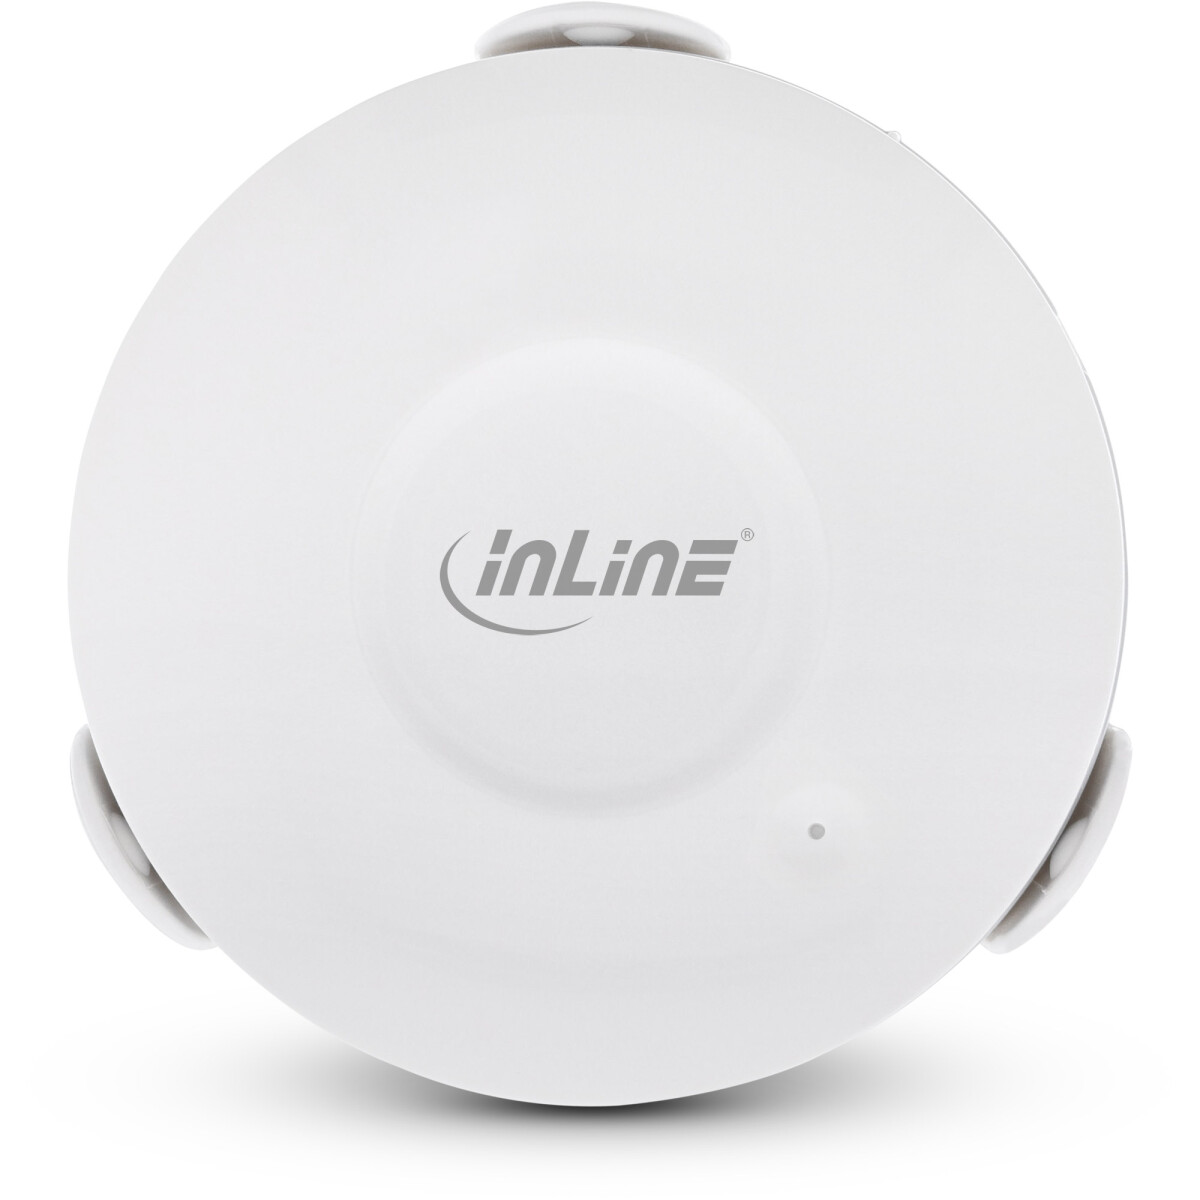 InLine® SmartHome humidity sensor